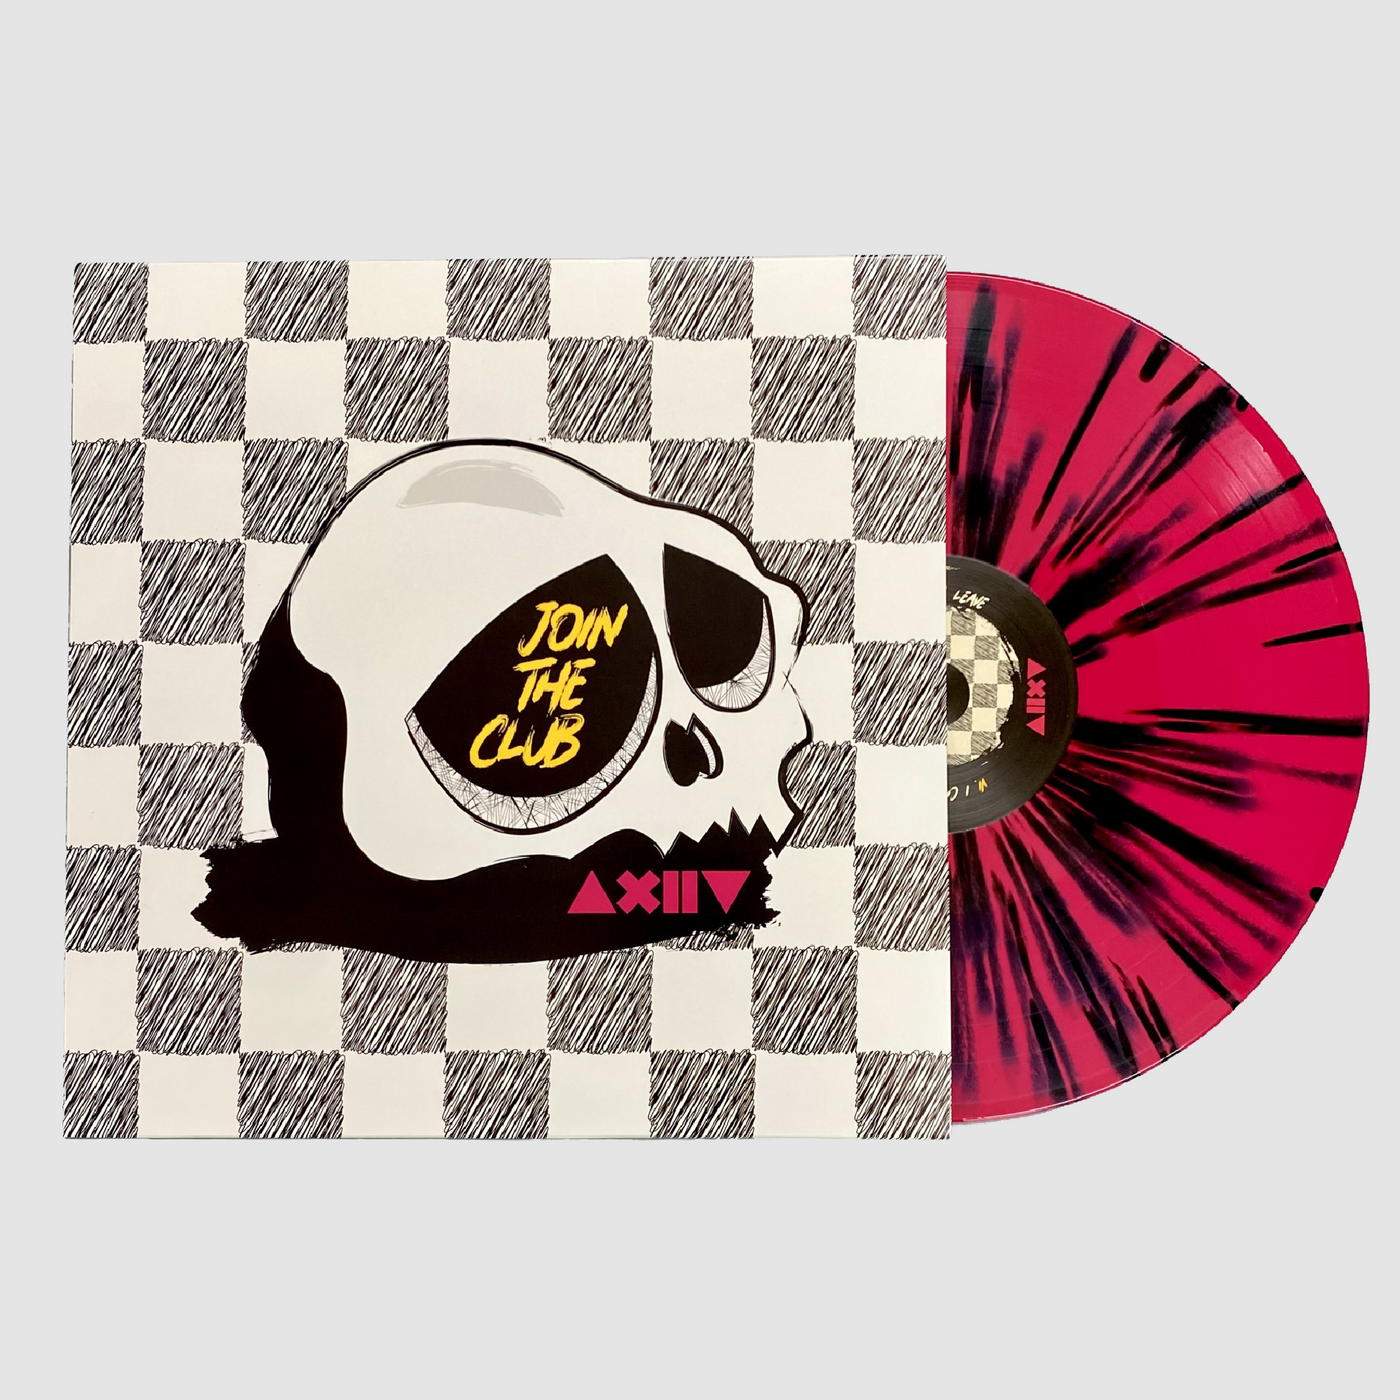 Join The Club Pink/ Black Splatter Vinyl (Signed) + Download (500 ONLY)